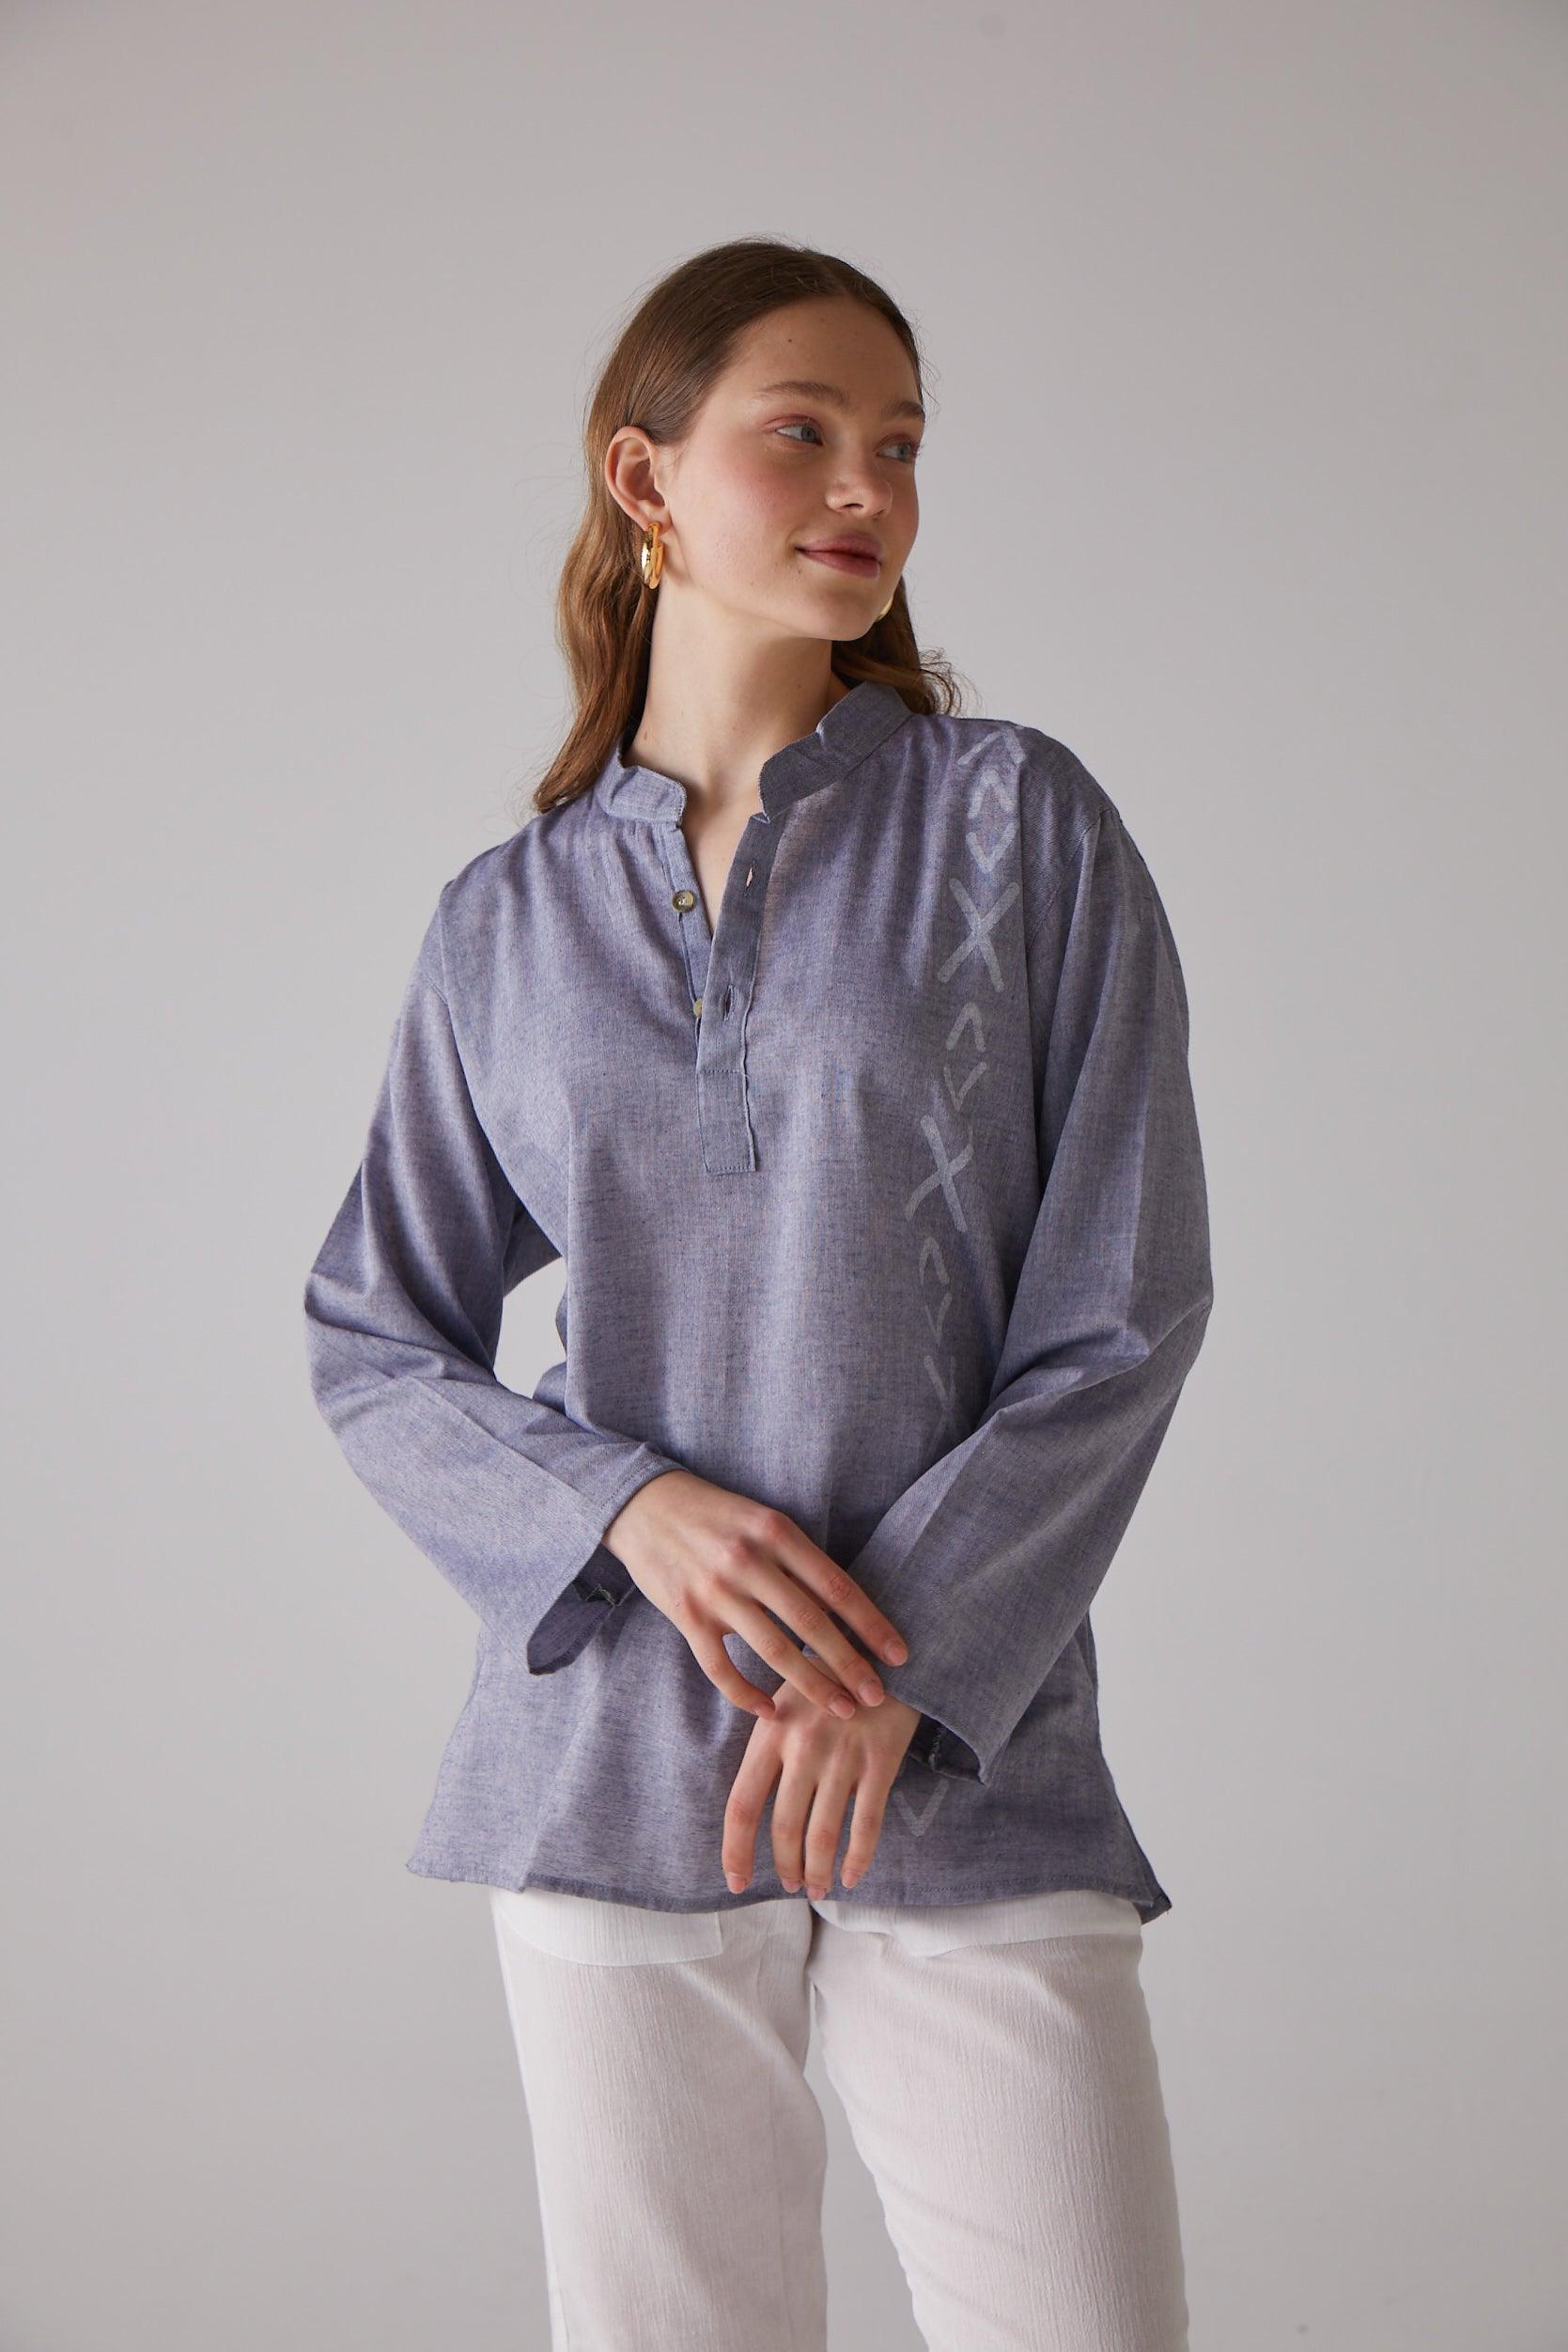 Long-Sleeve Blue X-Cross Pattern Shirt - 100% Organic Cotton - trendynow